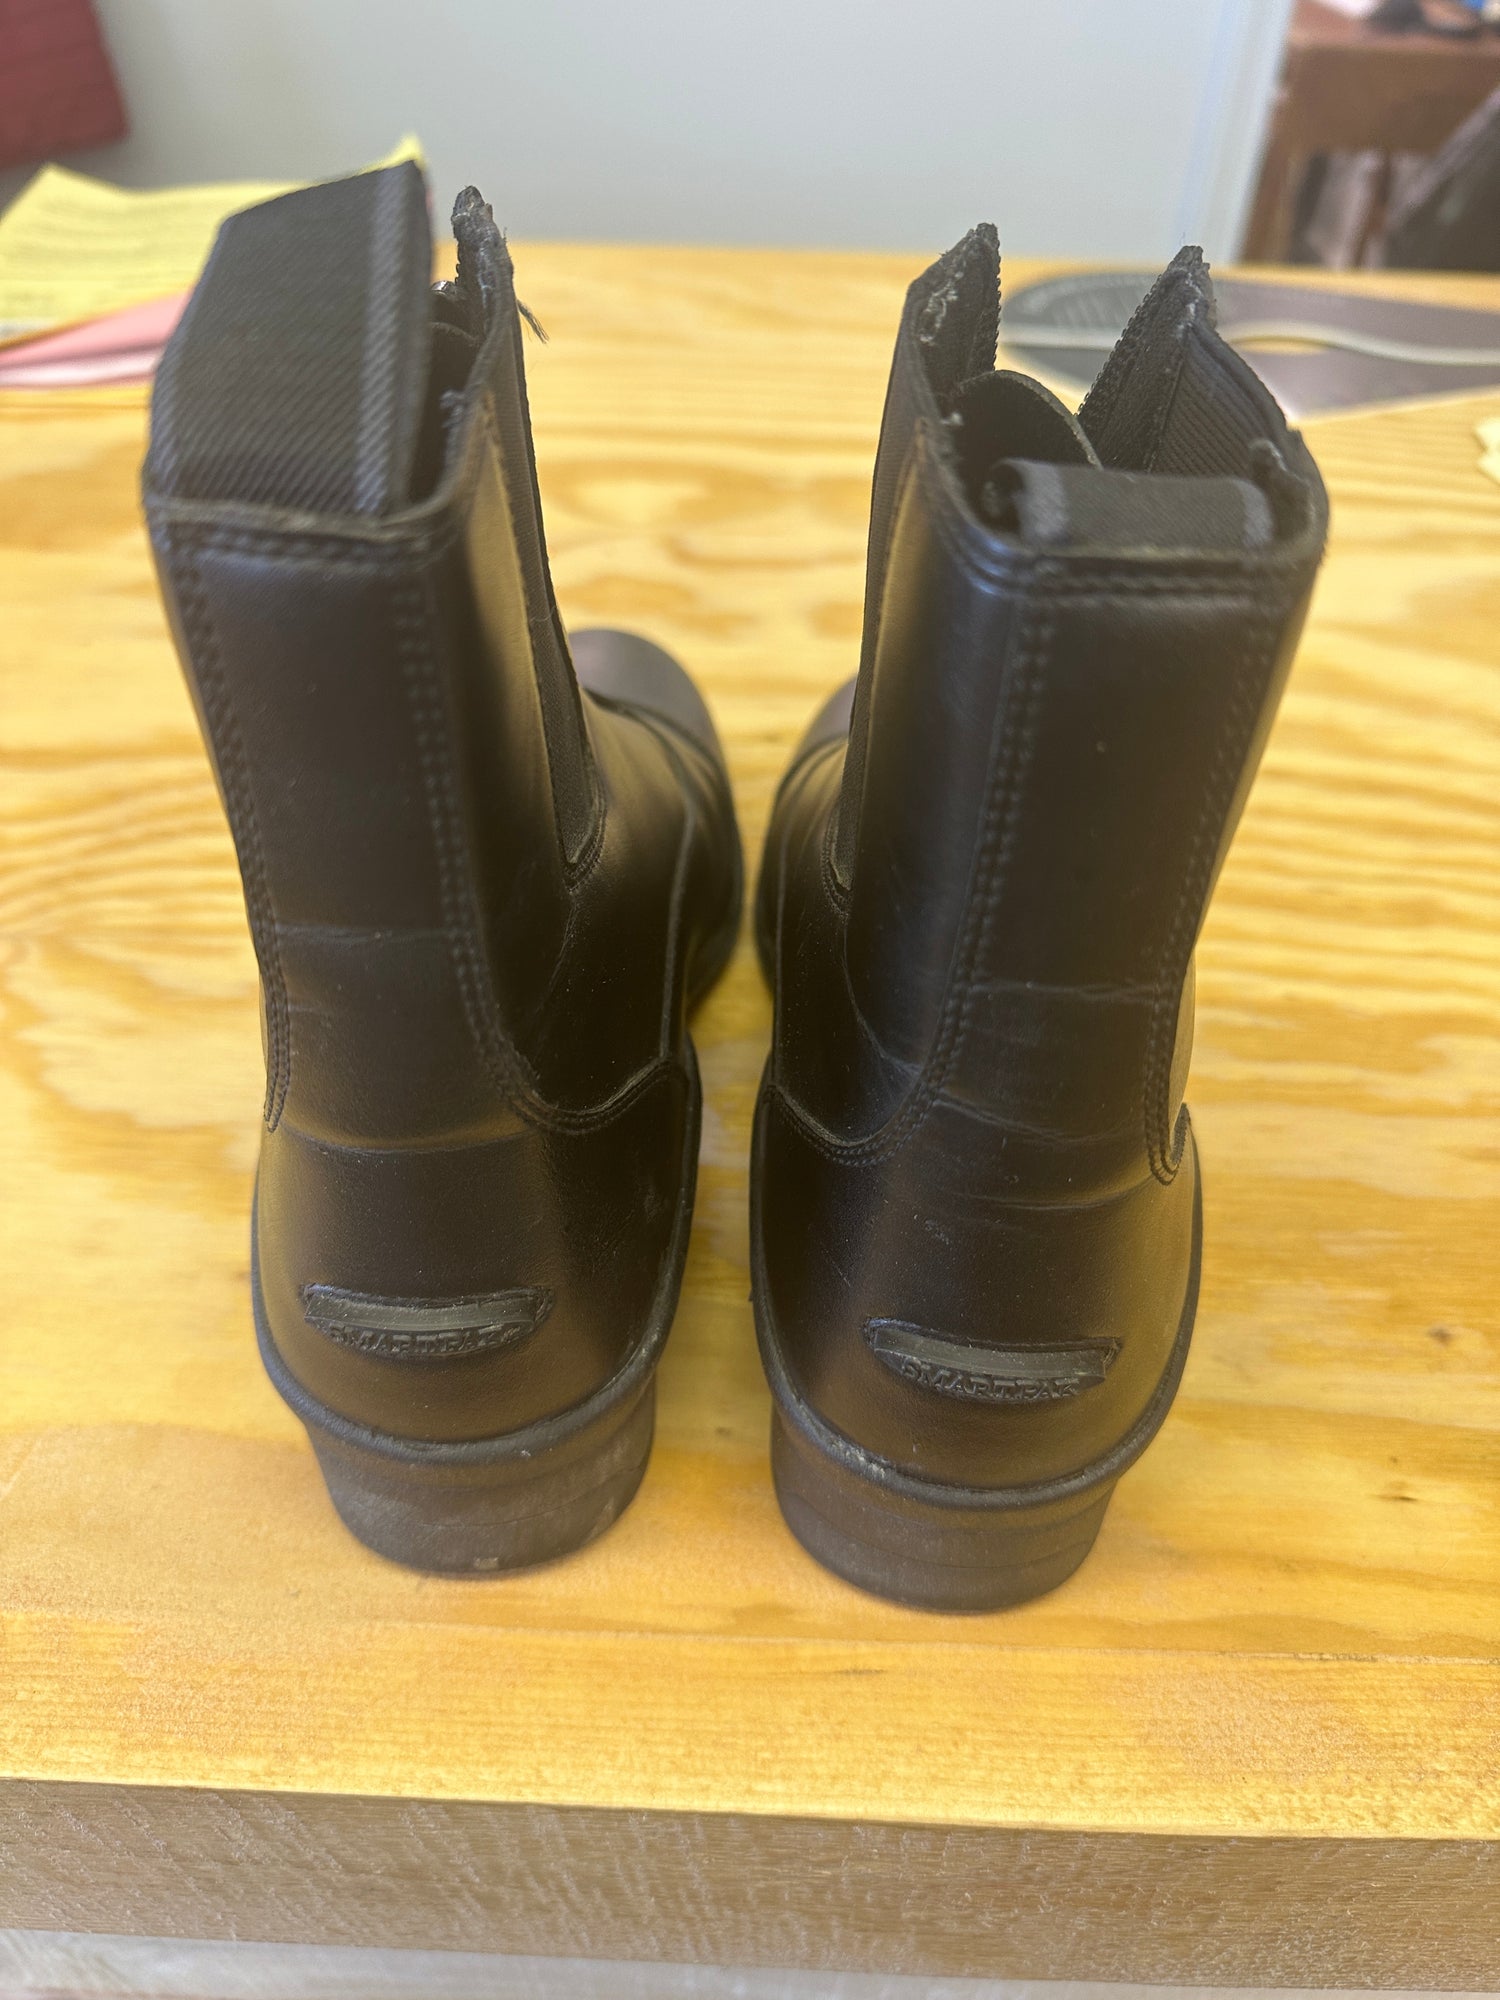 Women's size 7 paddock boots, smartpak size 7